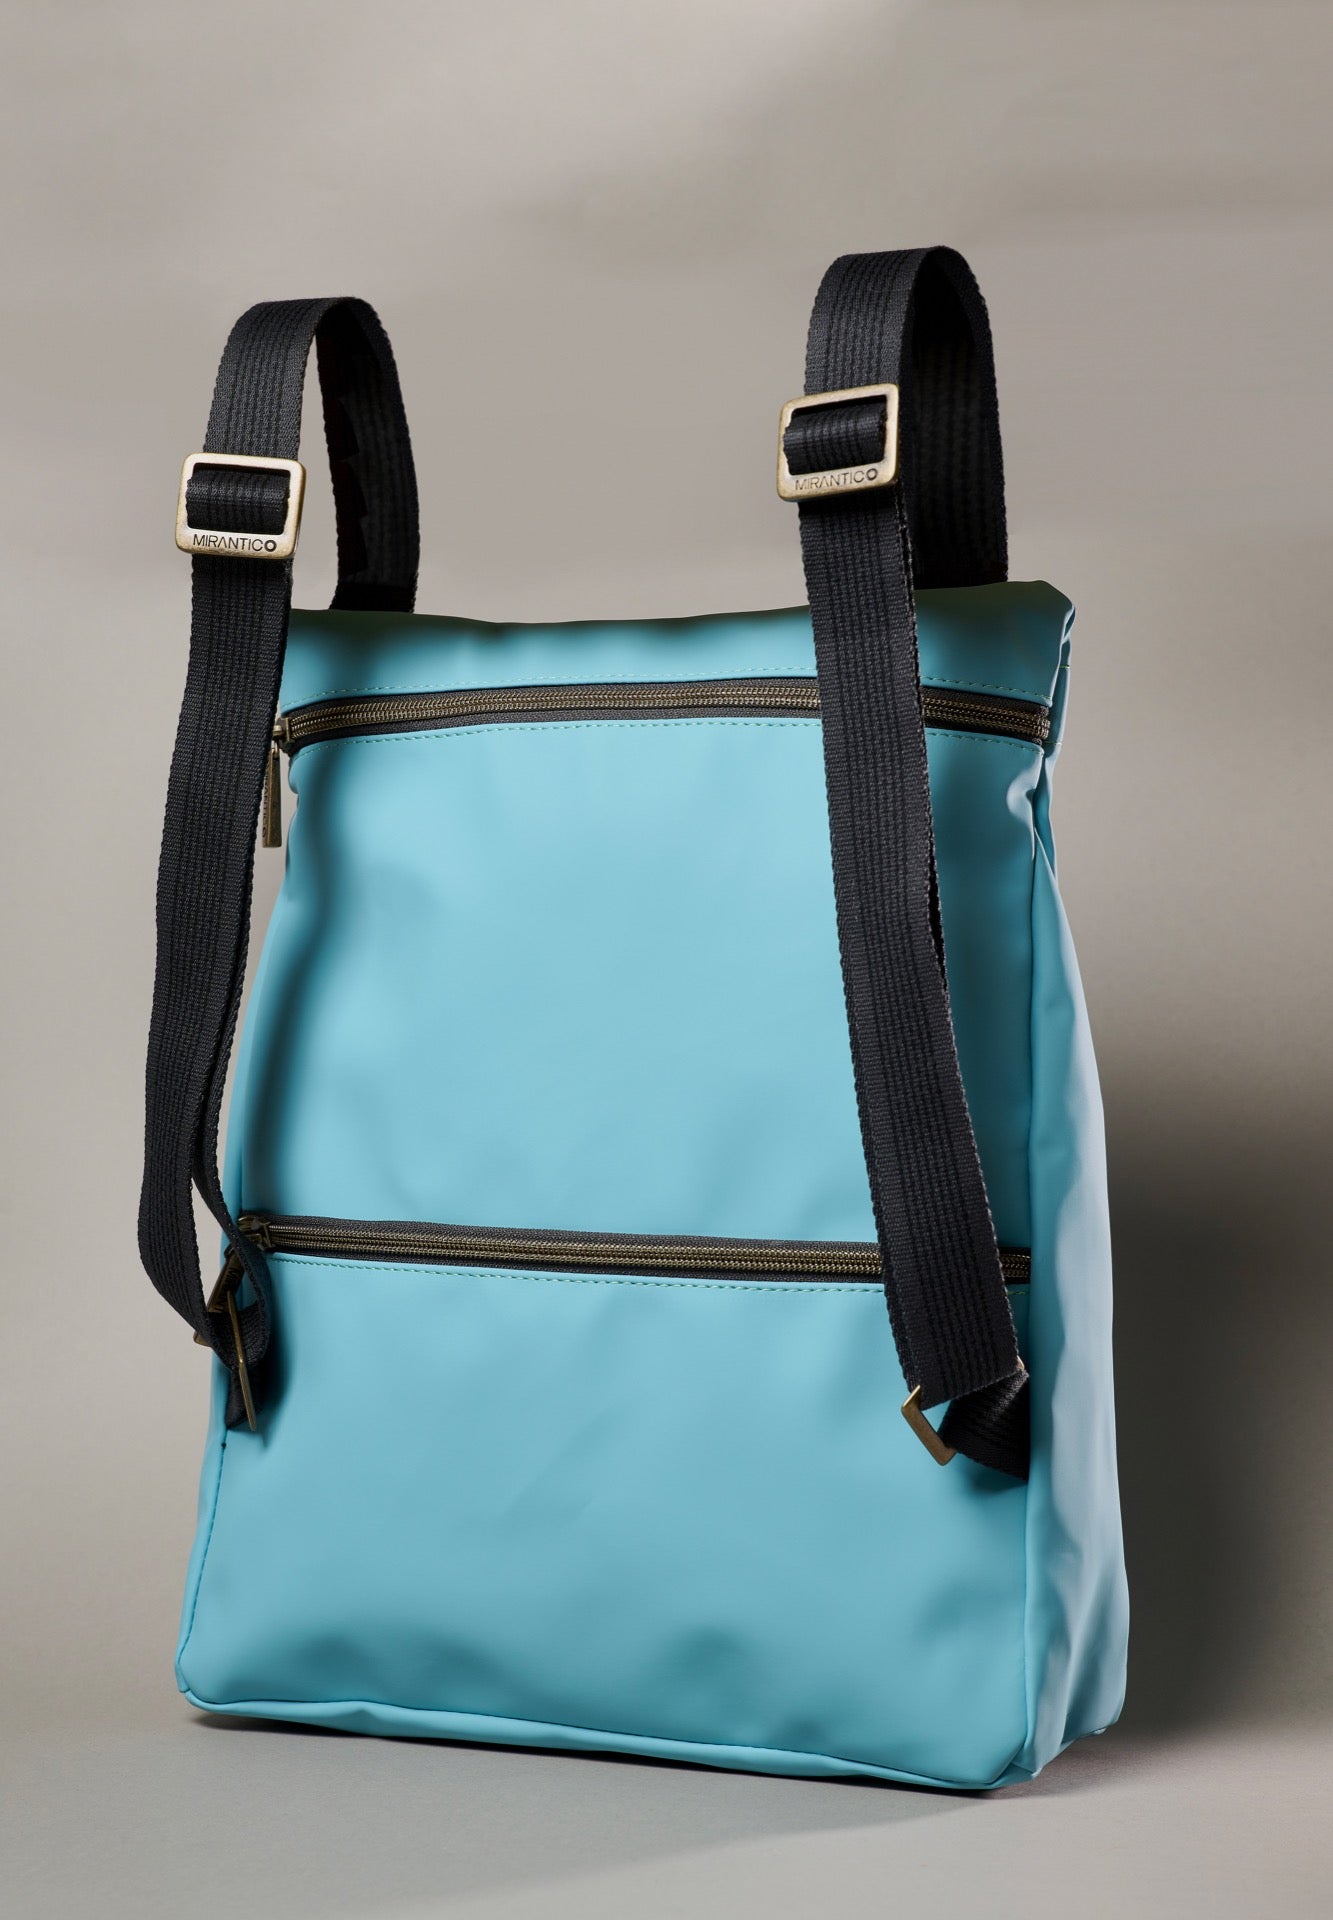 V2 x Mirantico - Light Blue Memo Bag Backpack with Pocket in Black Cashmere fabric